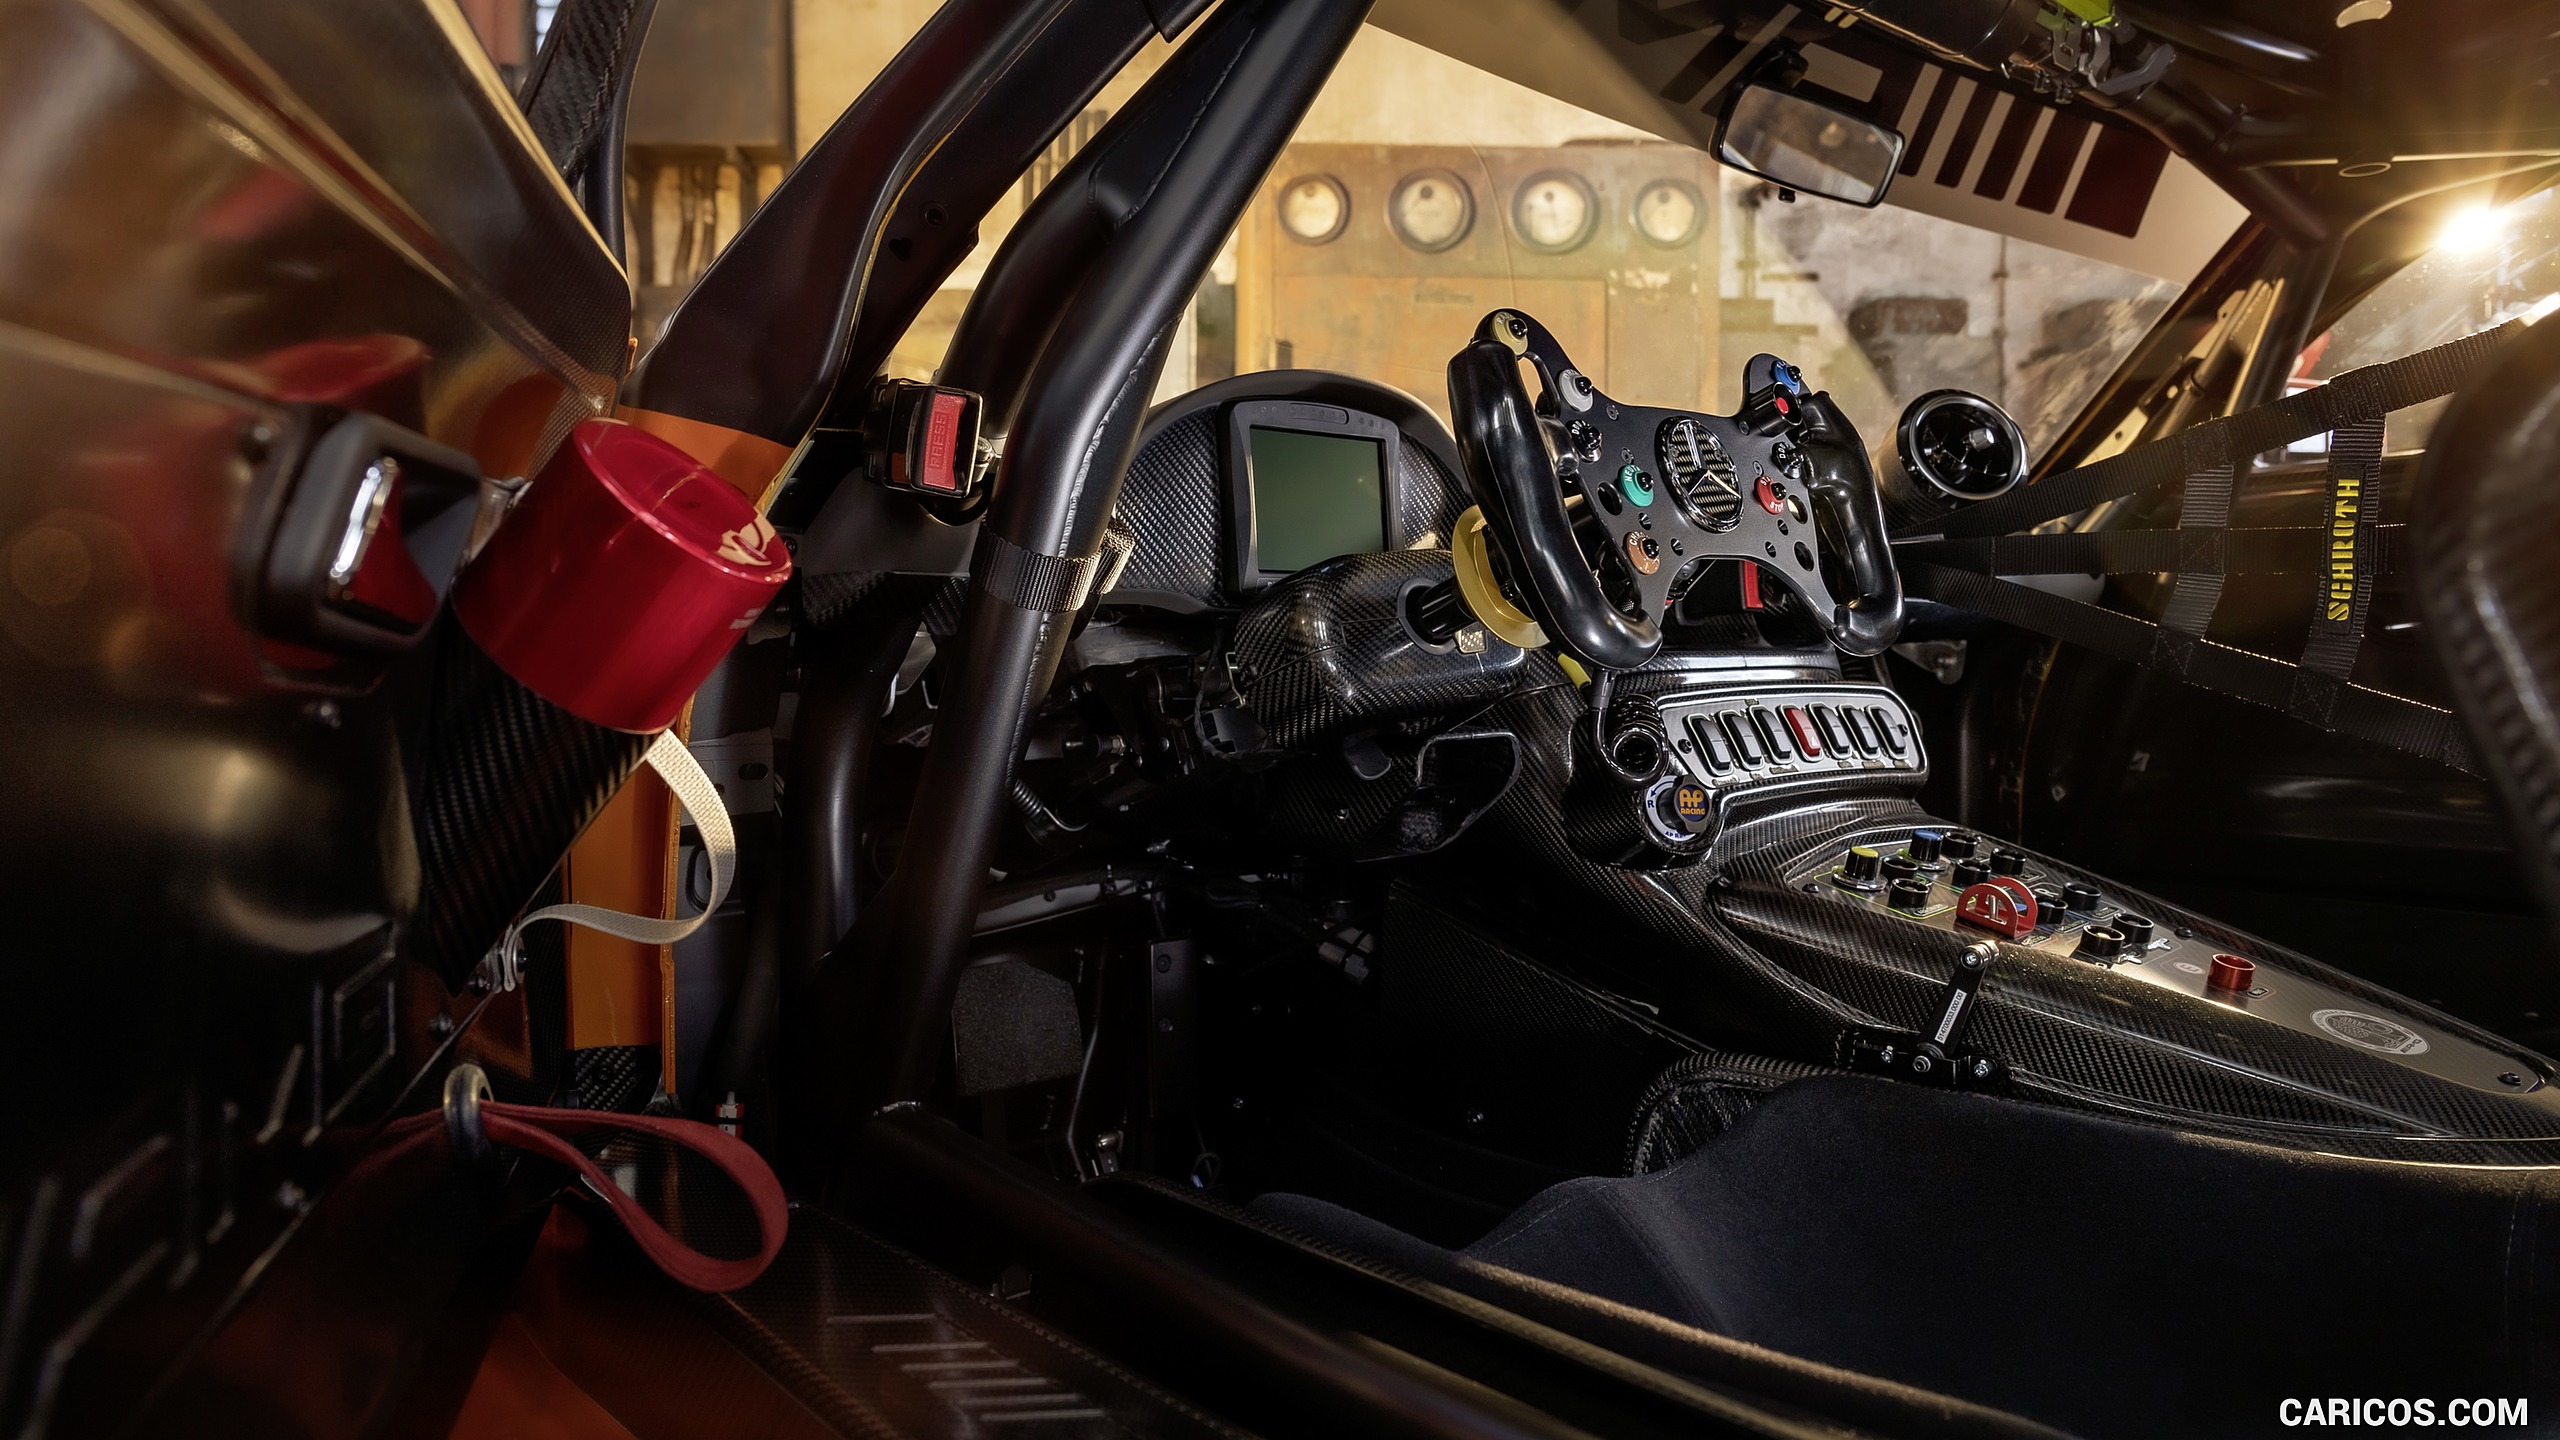 2020 Mercedes-AMG GT3 - Interior, #12 of 12